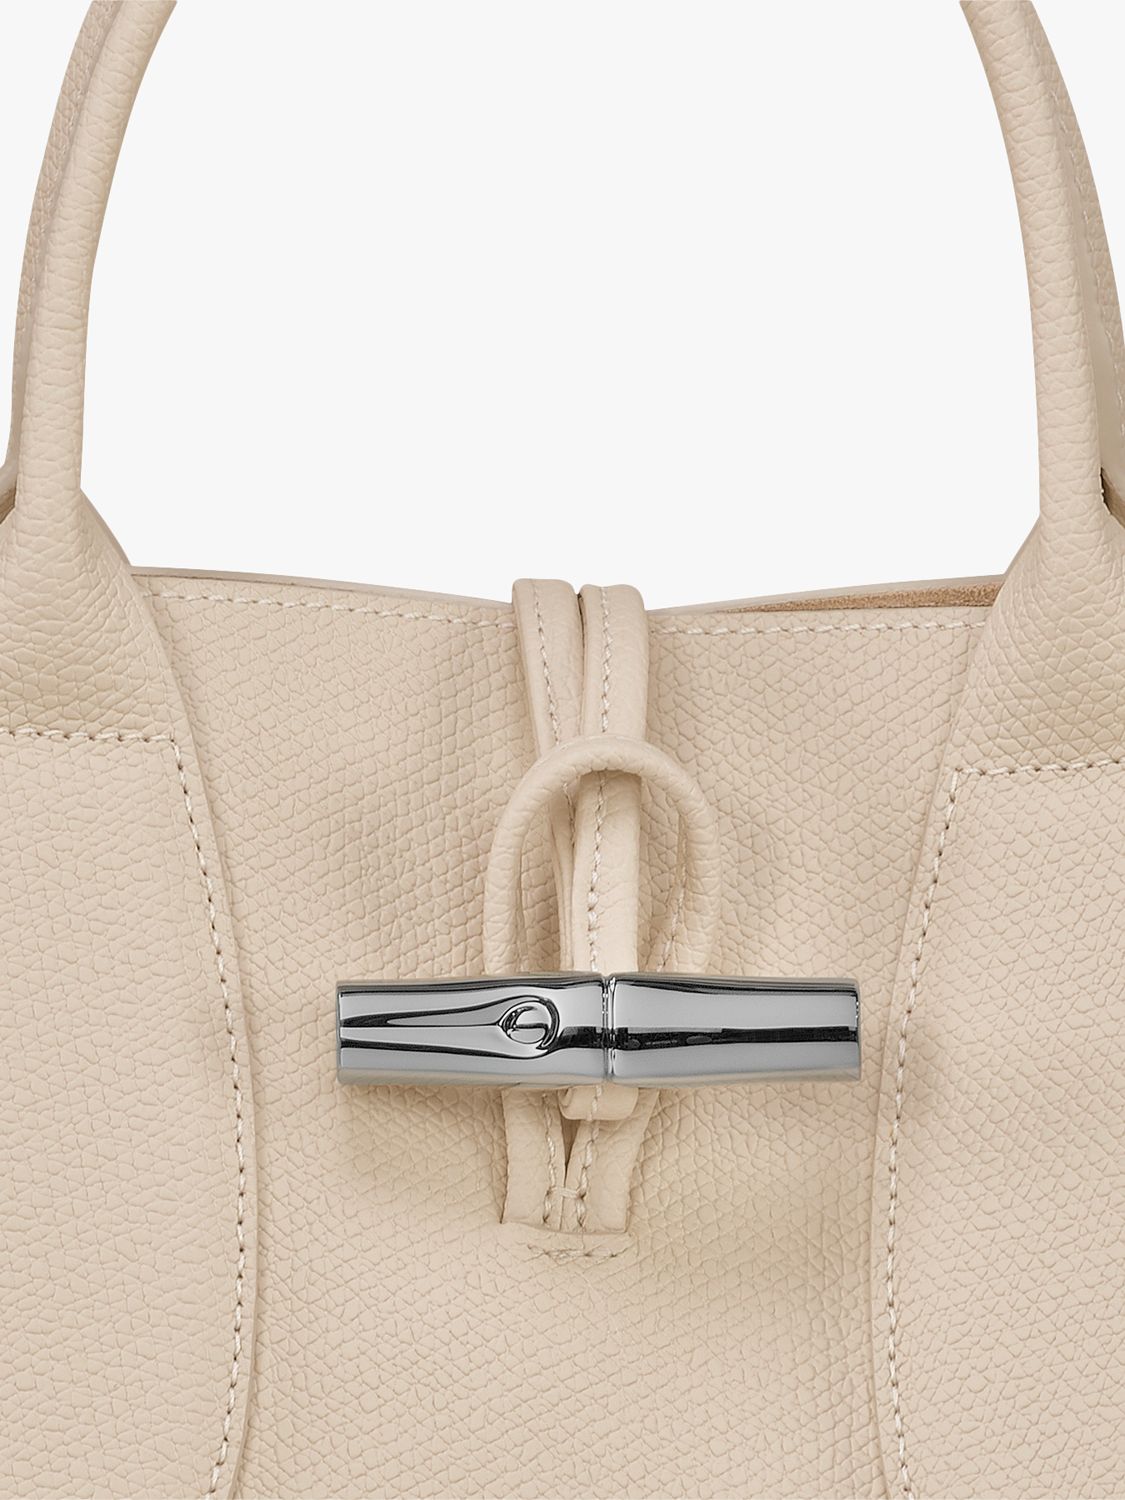 Buy Longchamp Roseau Medium Leather Top Handle Bag Online at johnlewis.com